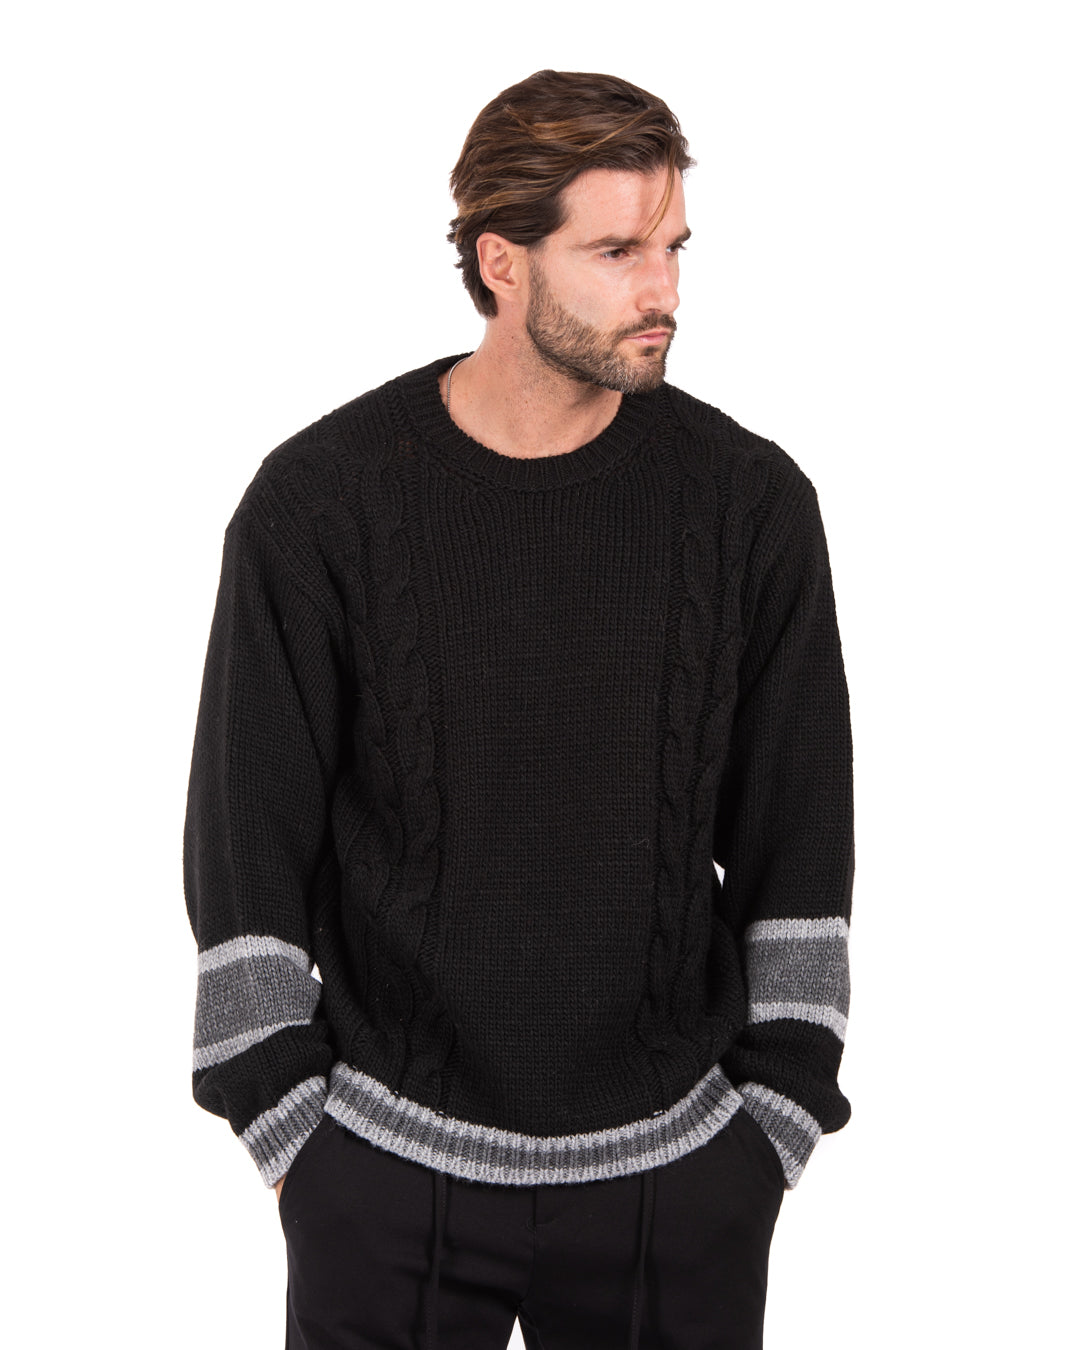 Edam - black sweater with side braids